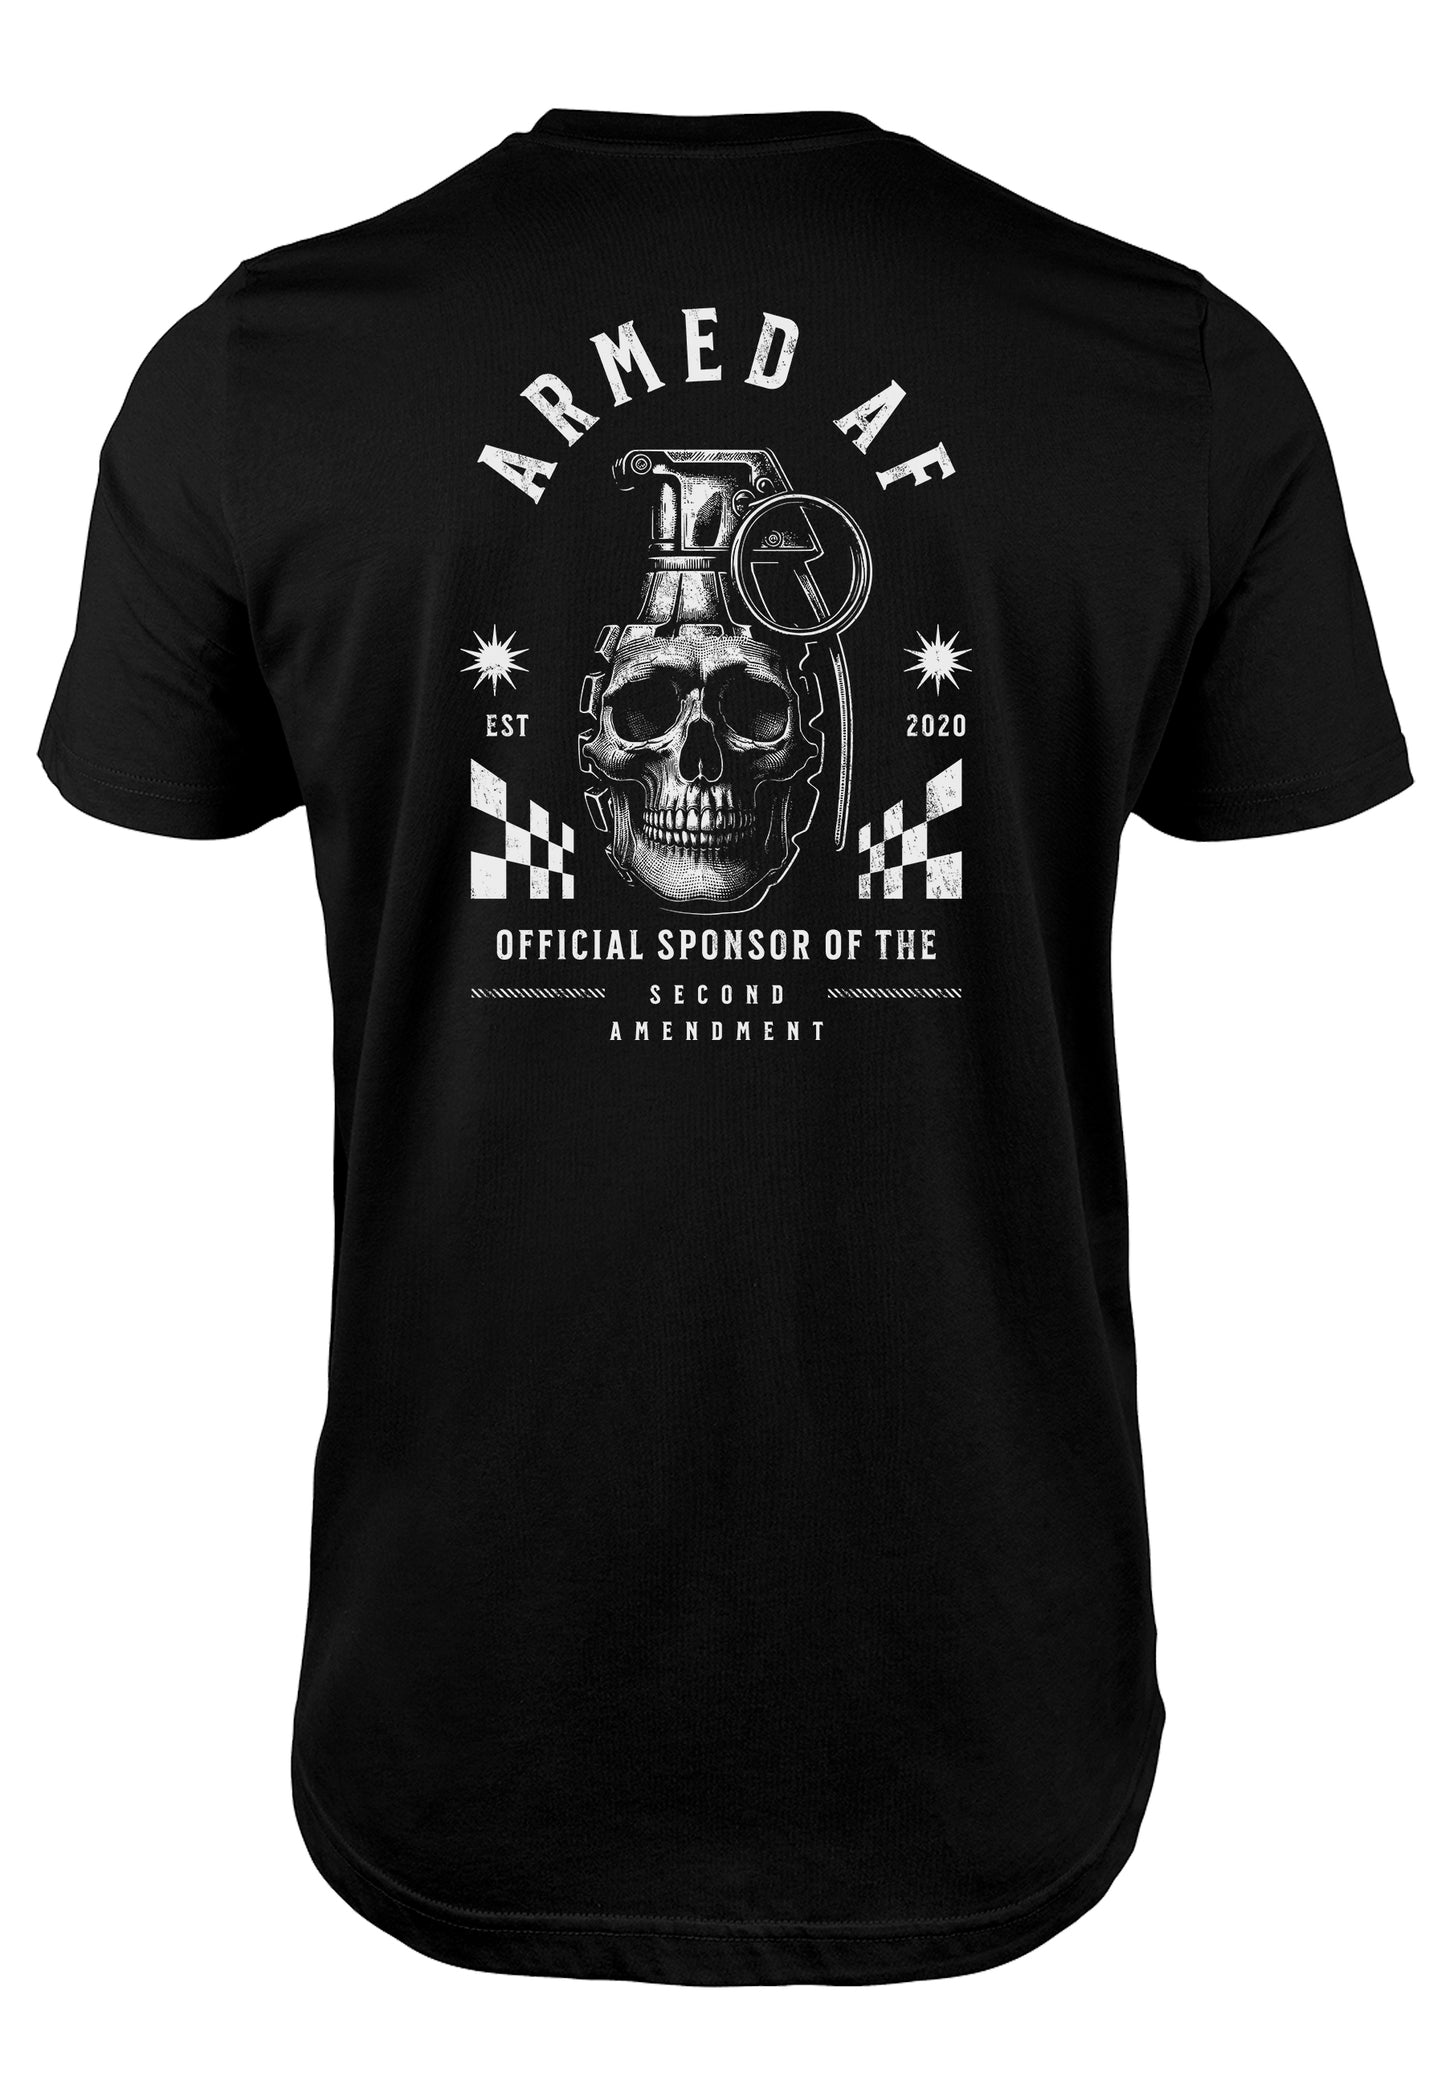 Second Amendment t-shirt with grenade skull